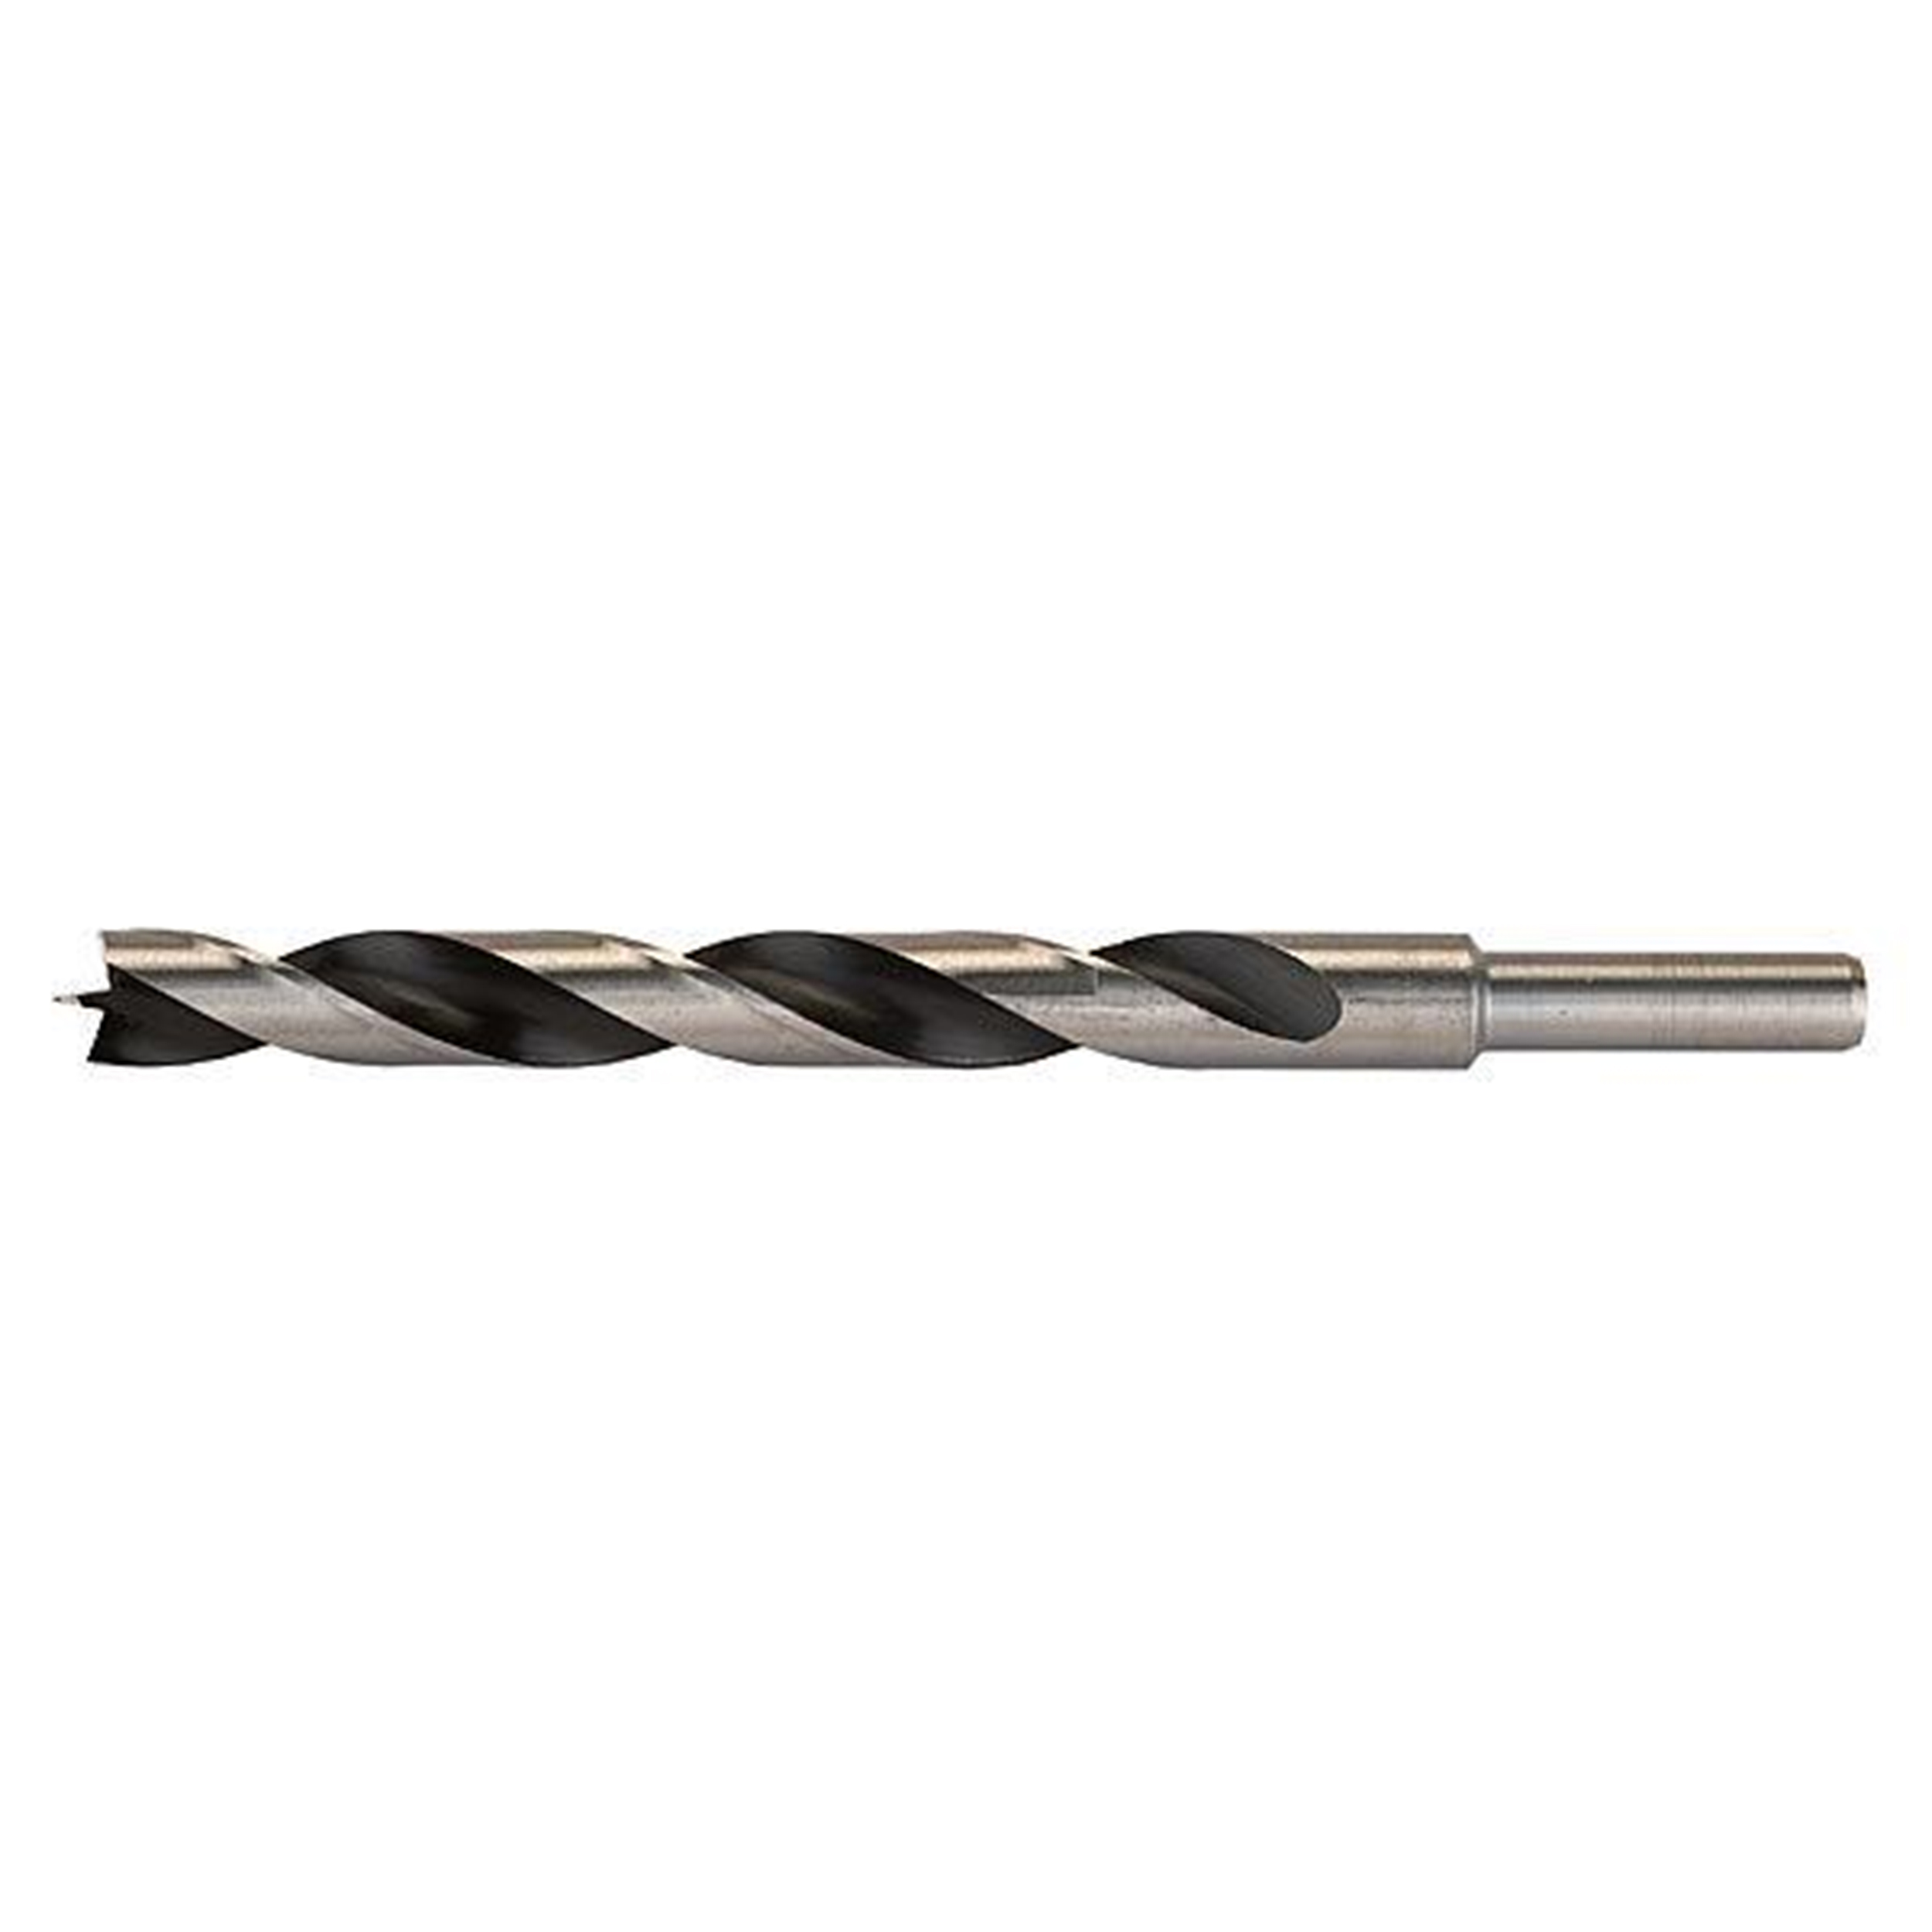 11mm Chrome-vanadium Steel Brad Point Drill Bit